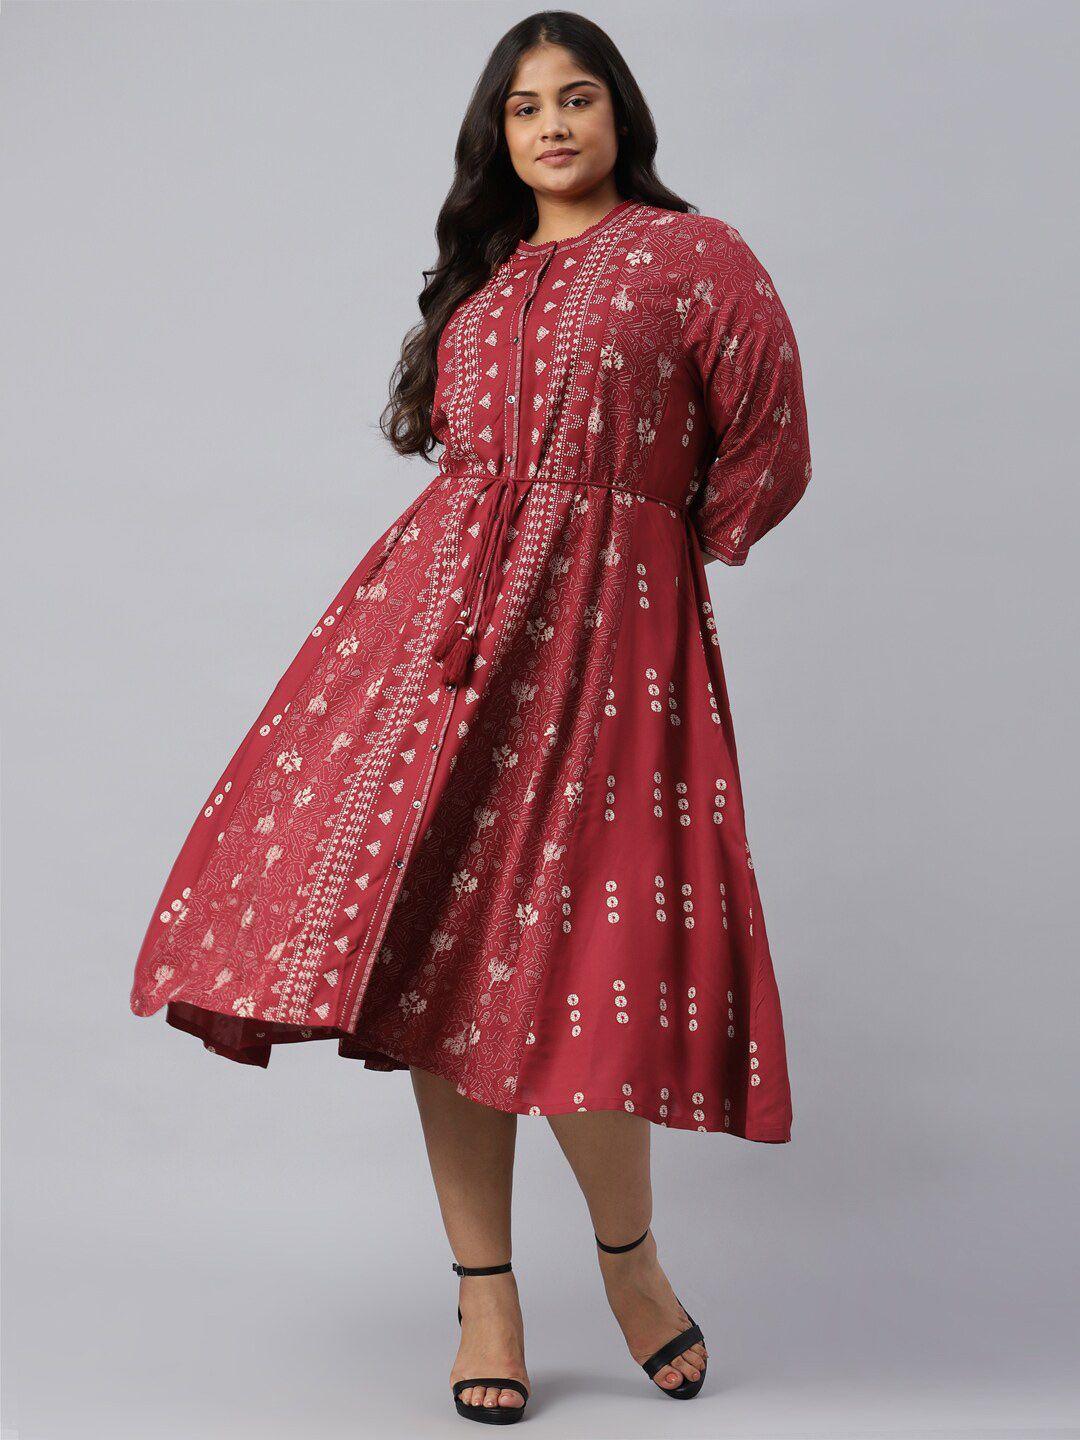 w-red-ethnic-motifs-chiffon-a-line-midi-dress